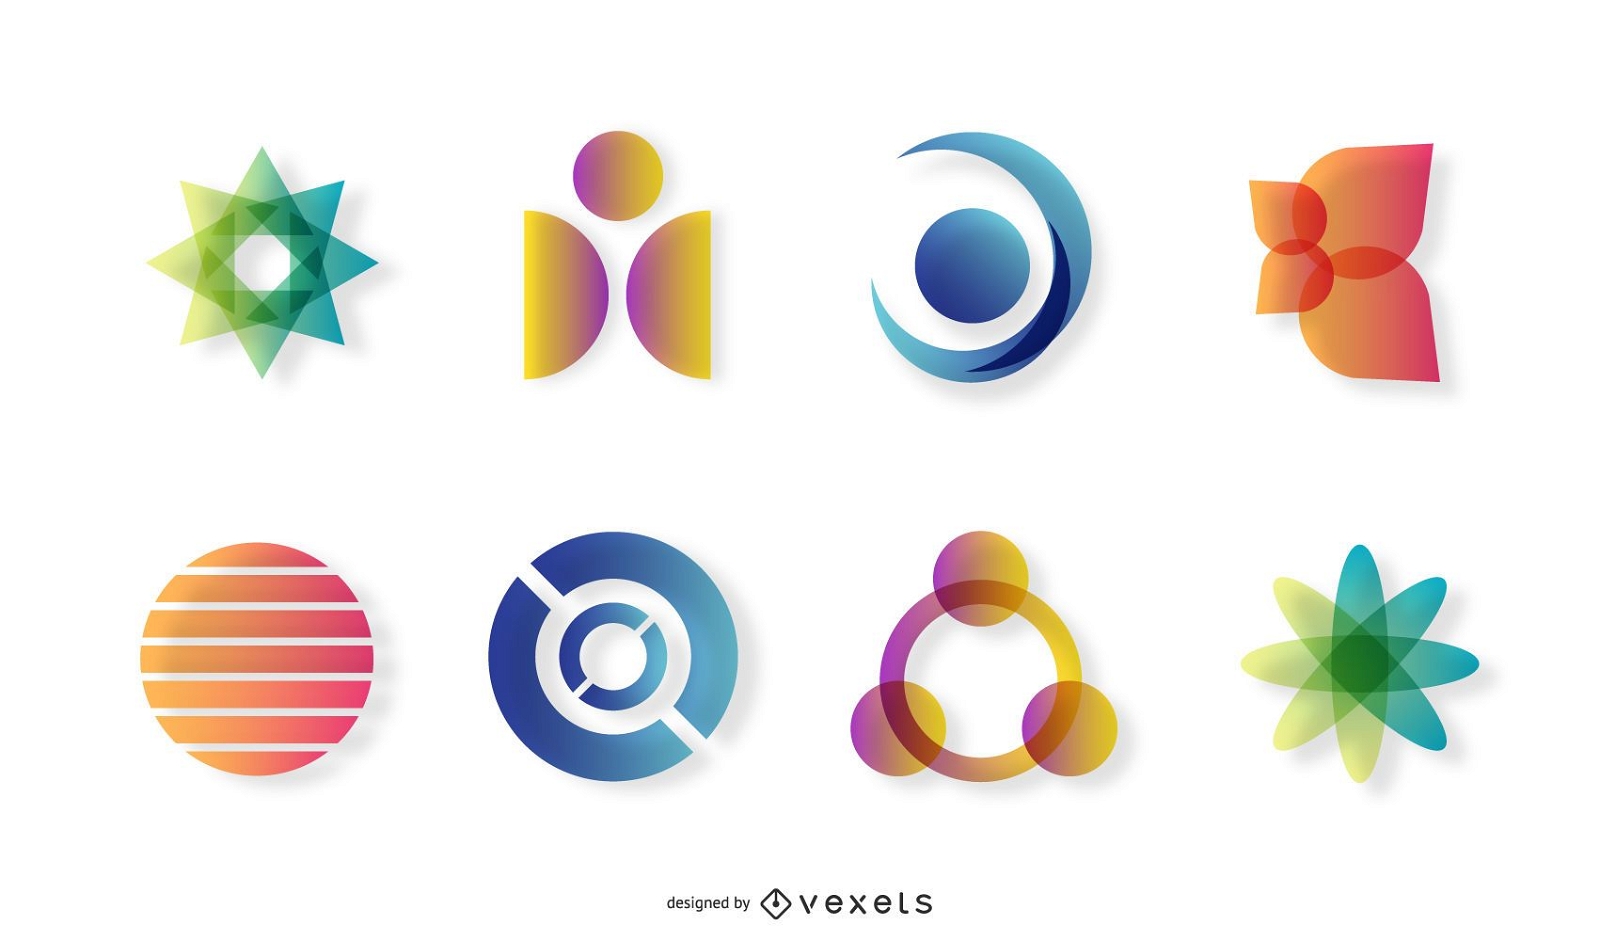 Logos de diferentes colores